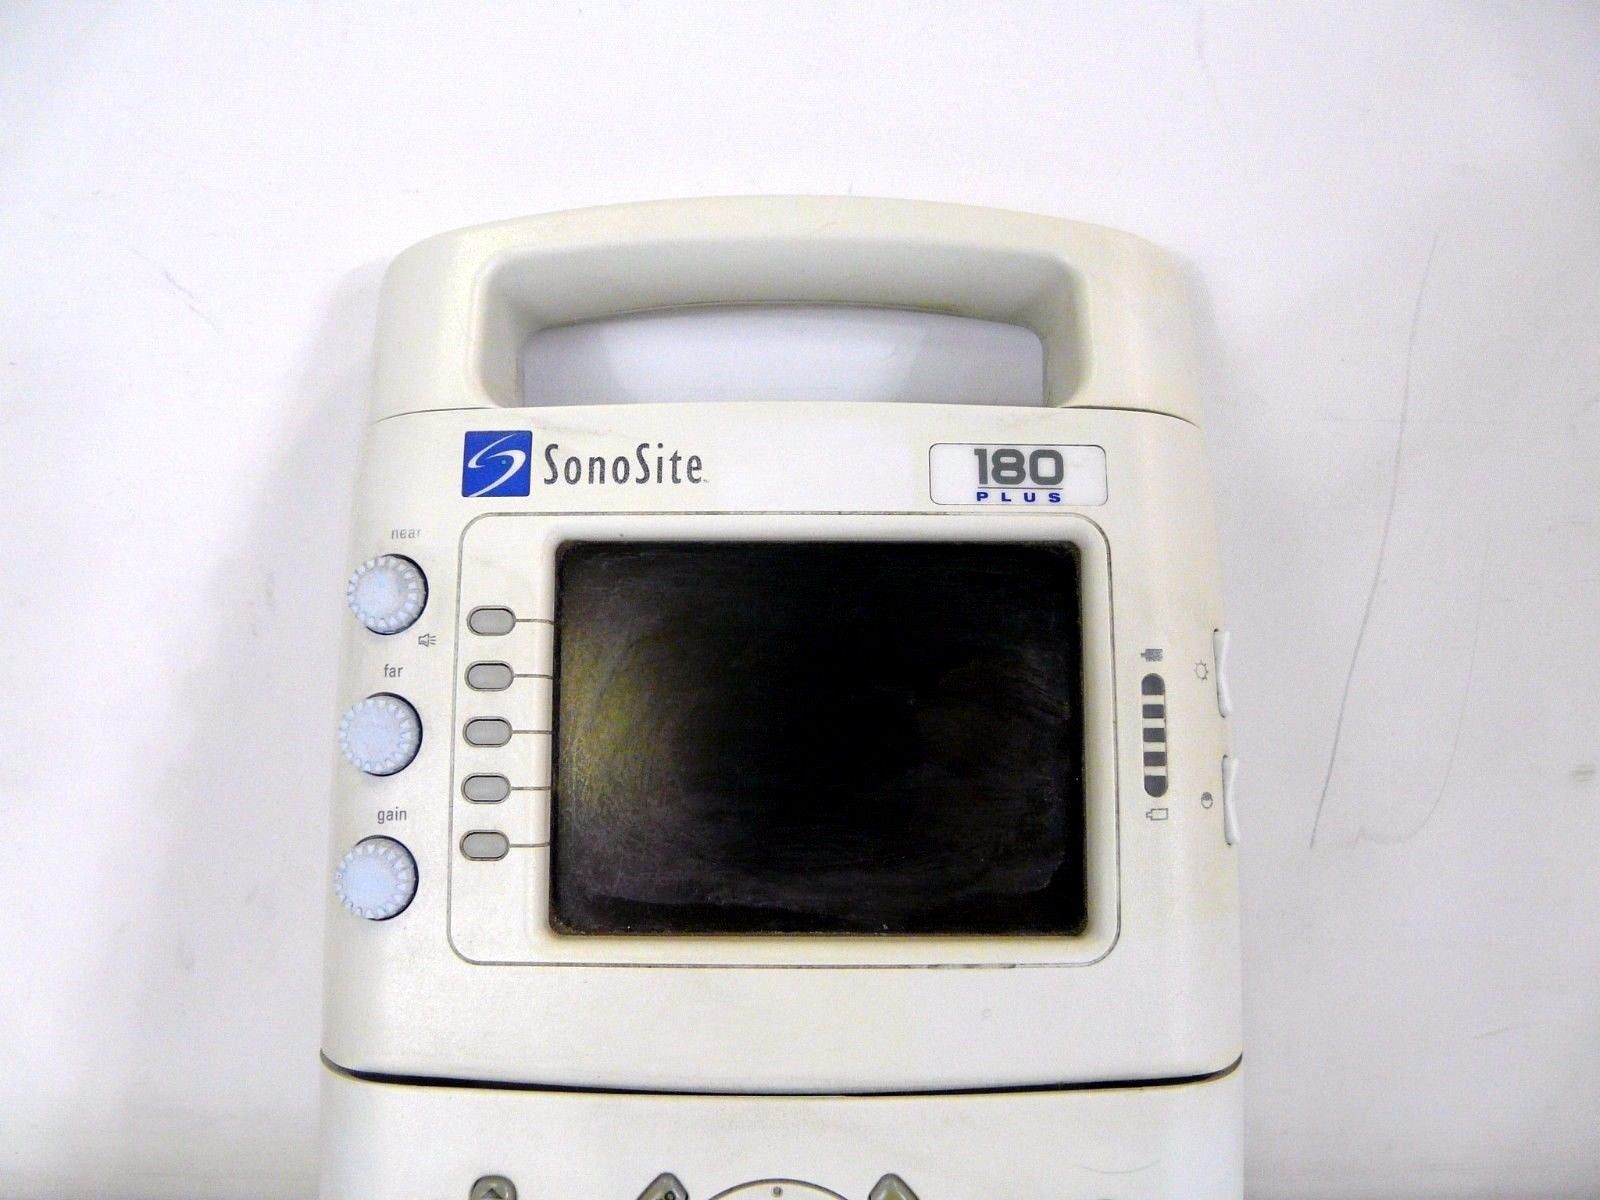 Sonosite 180 Plus Portable Ultrasound System P02462-02 Medical DIAGNOSTIC ULTRASOUND MACHINES FOR SALE